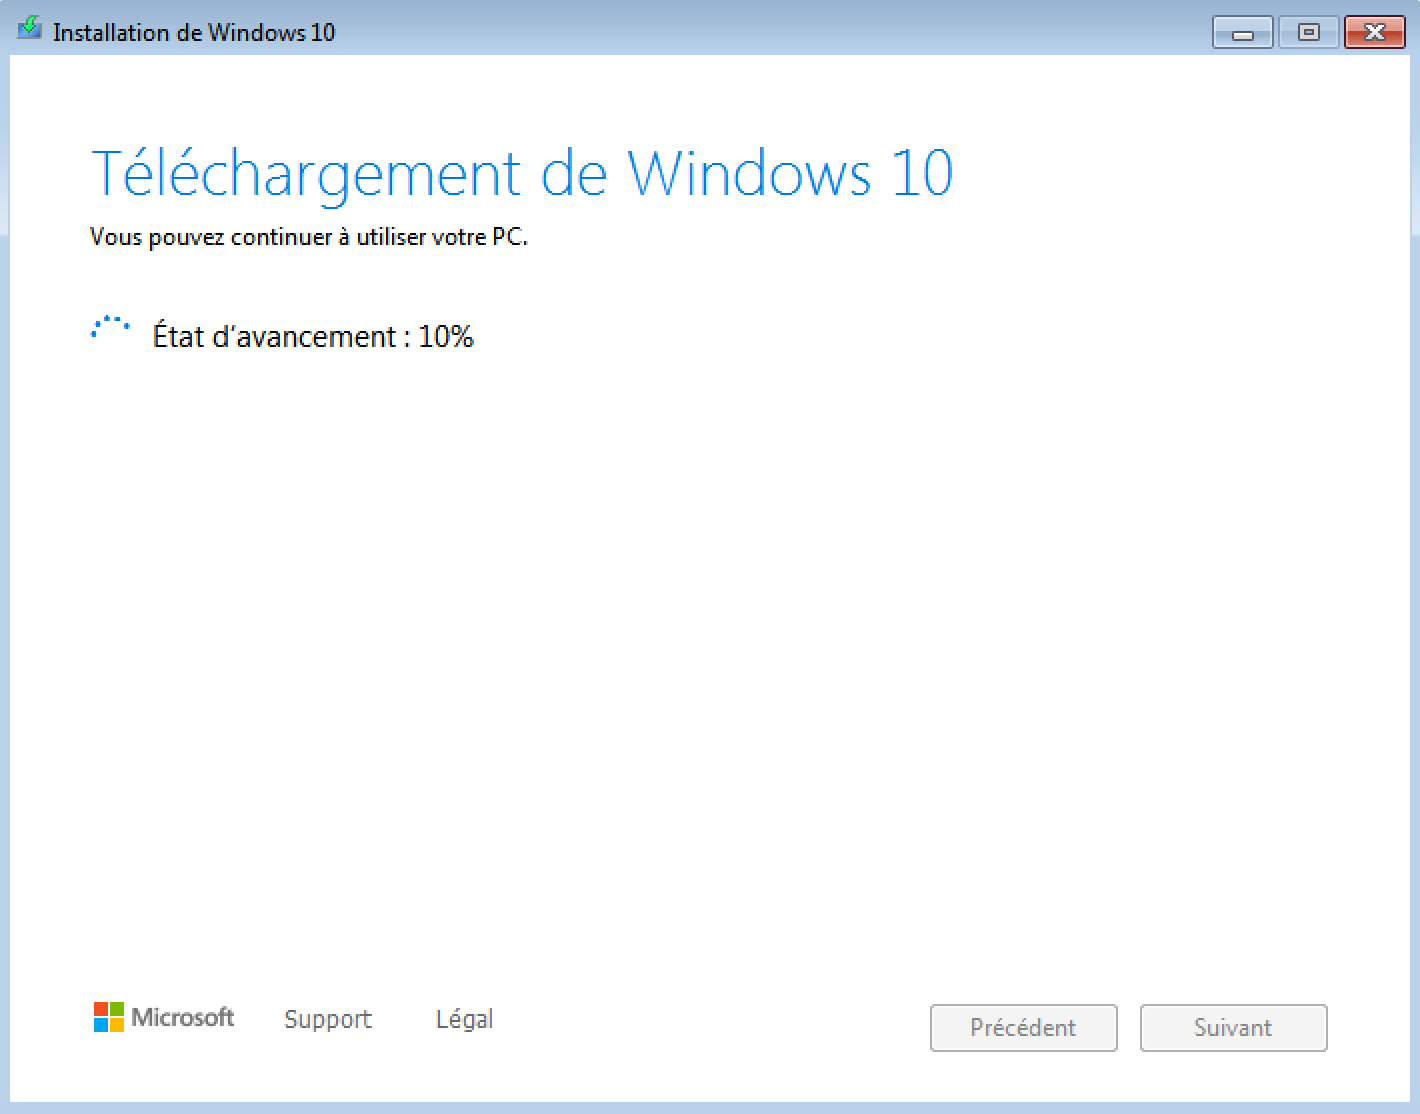 Images Frandroid Com Wp Content Uploads 19 10 Windows 7 Vers Windows 10 3 Png